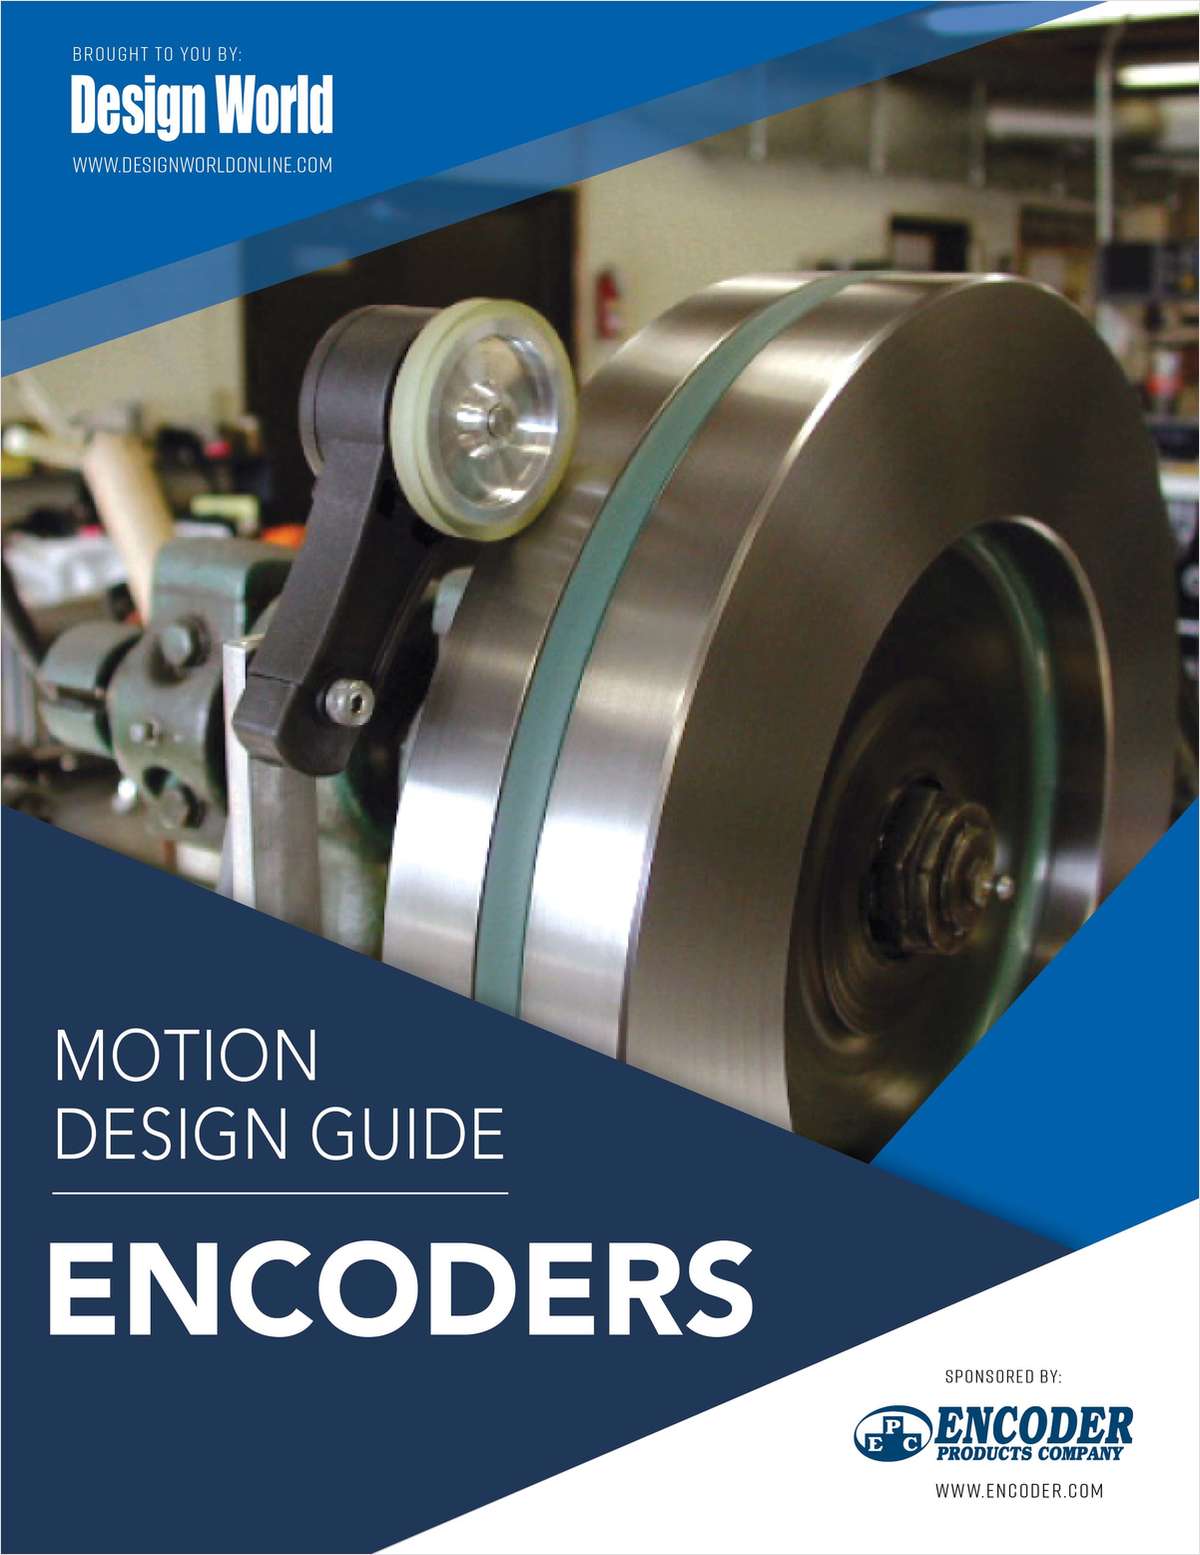 Encoder's Design Guide